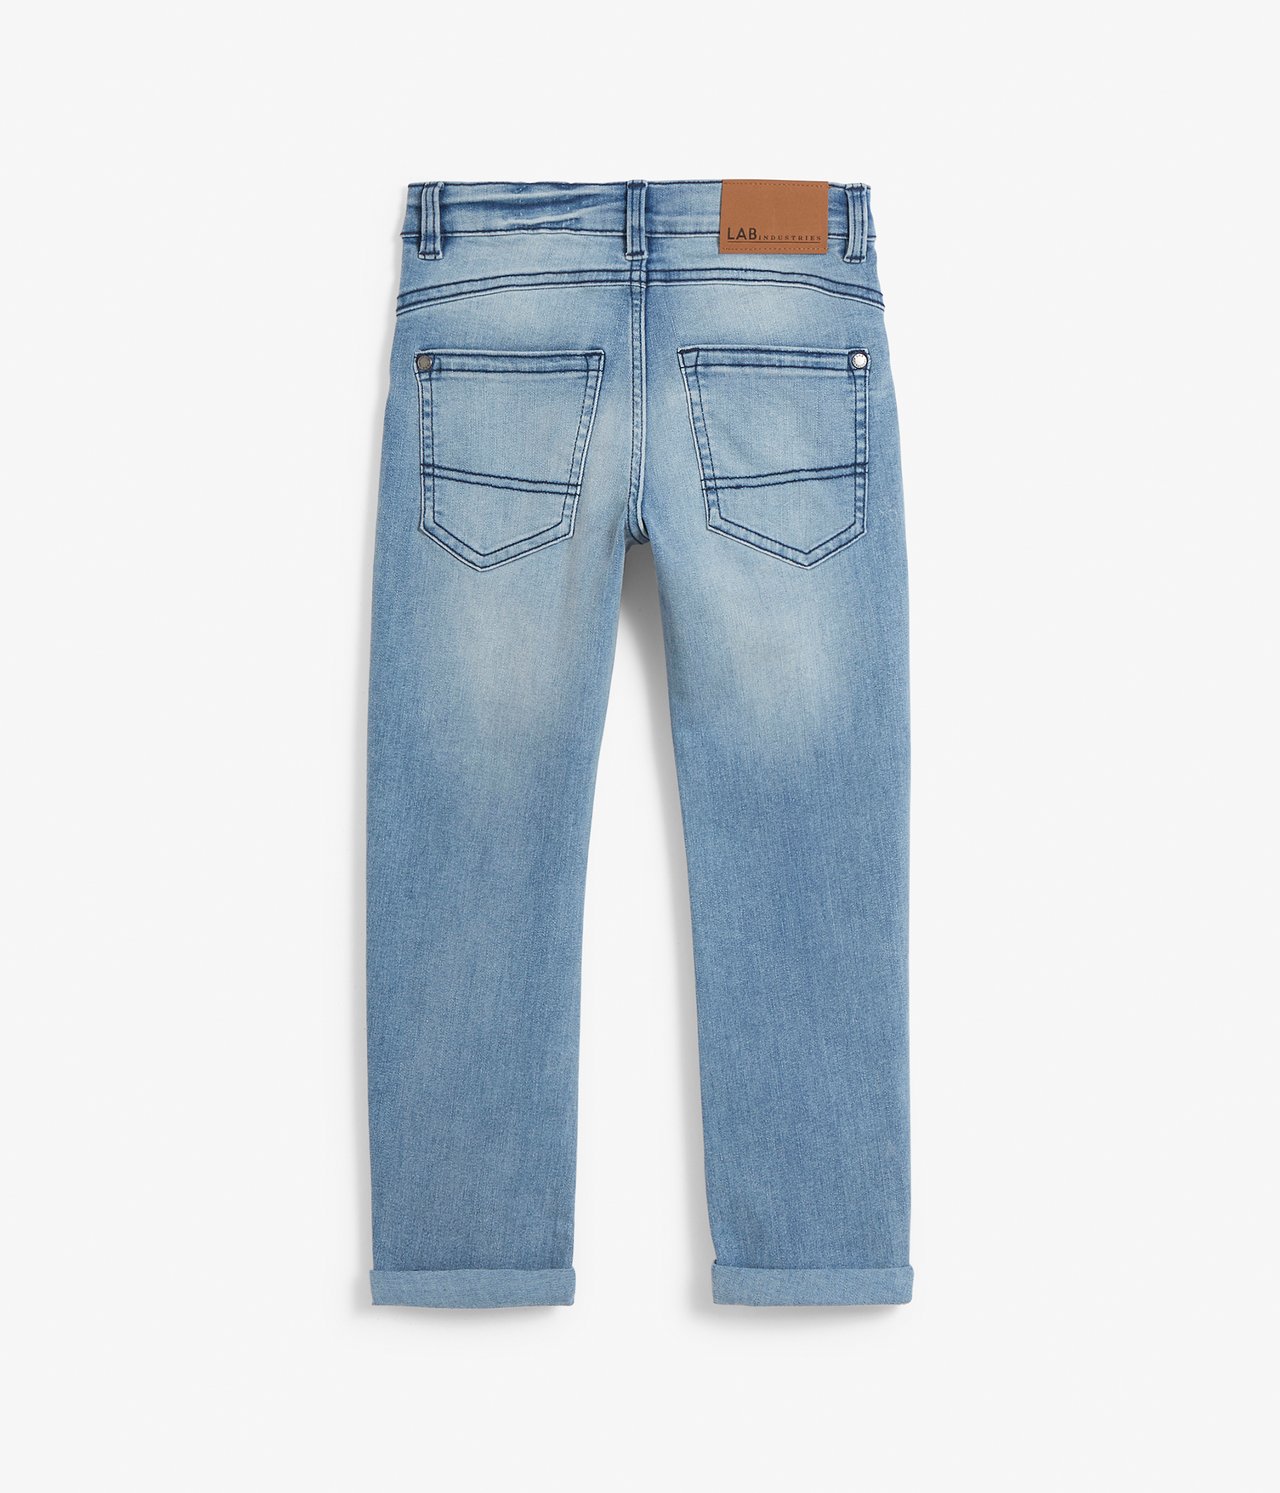 Bill jeans relaxed fit - Blå - 7